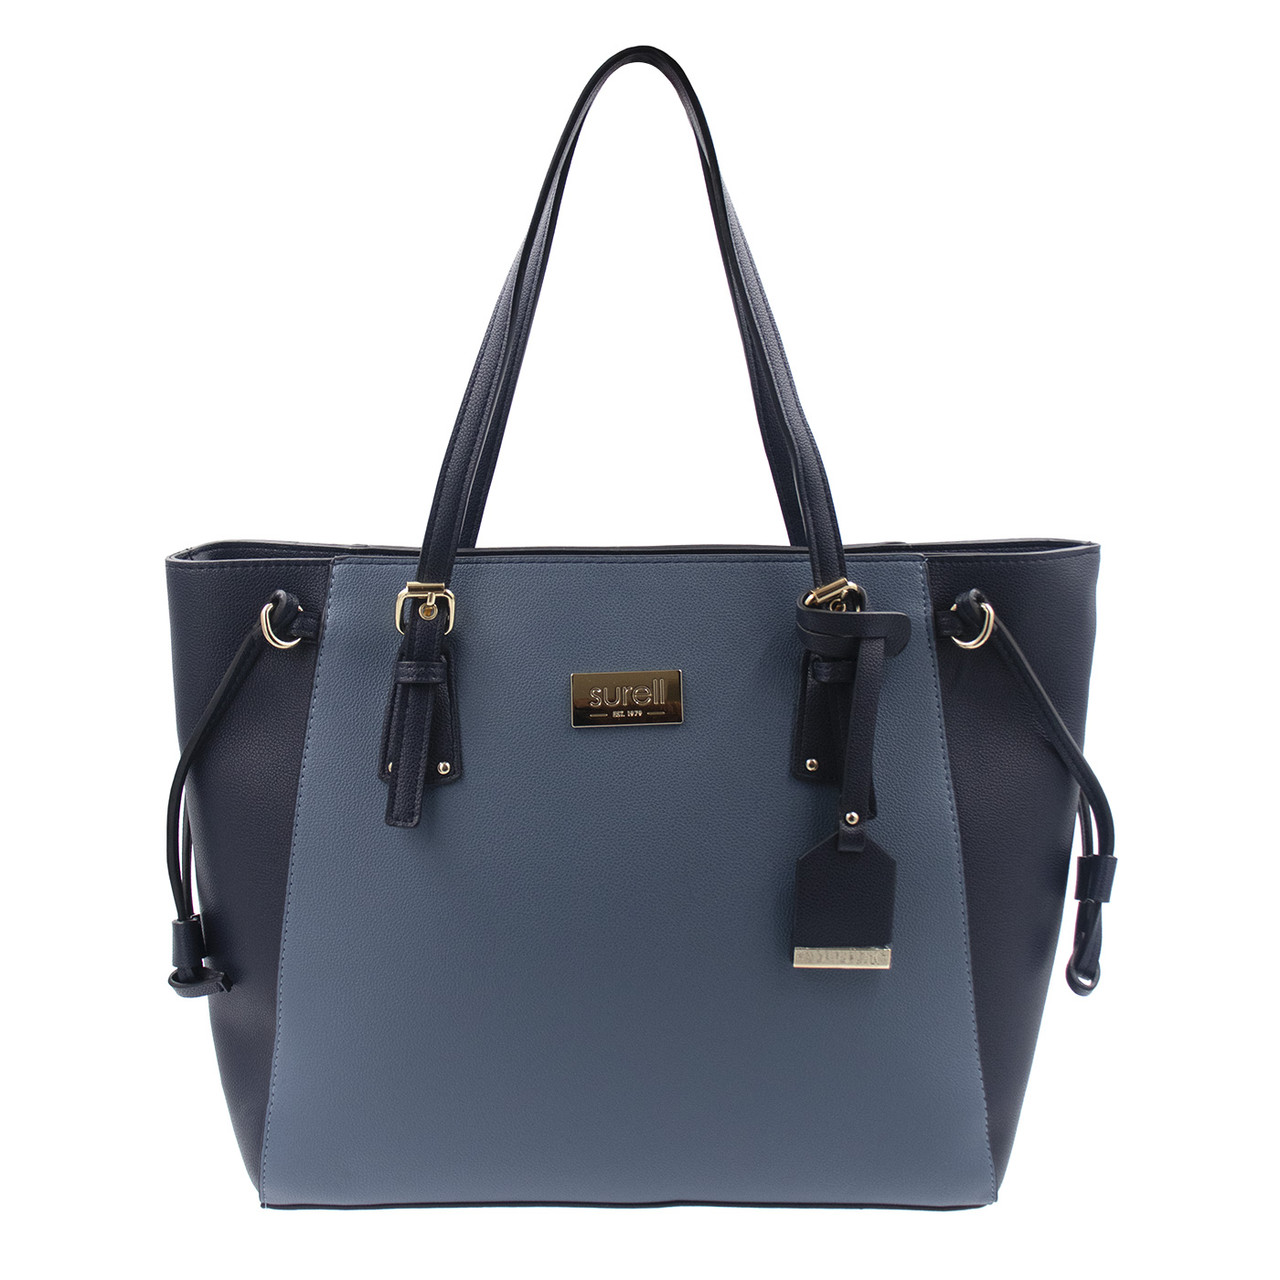 Twiggy London Blue Pleather Tote Bag | eBay